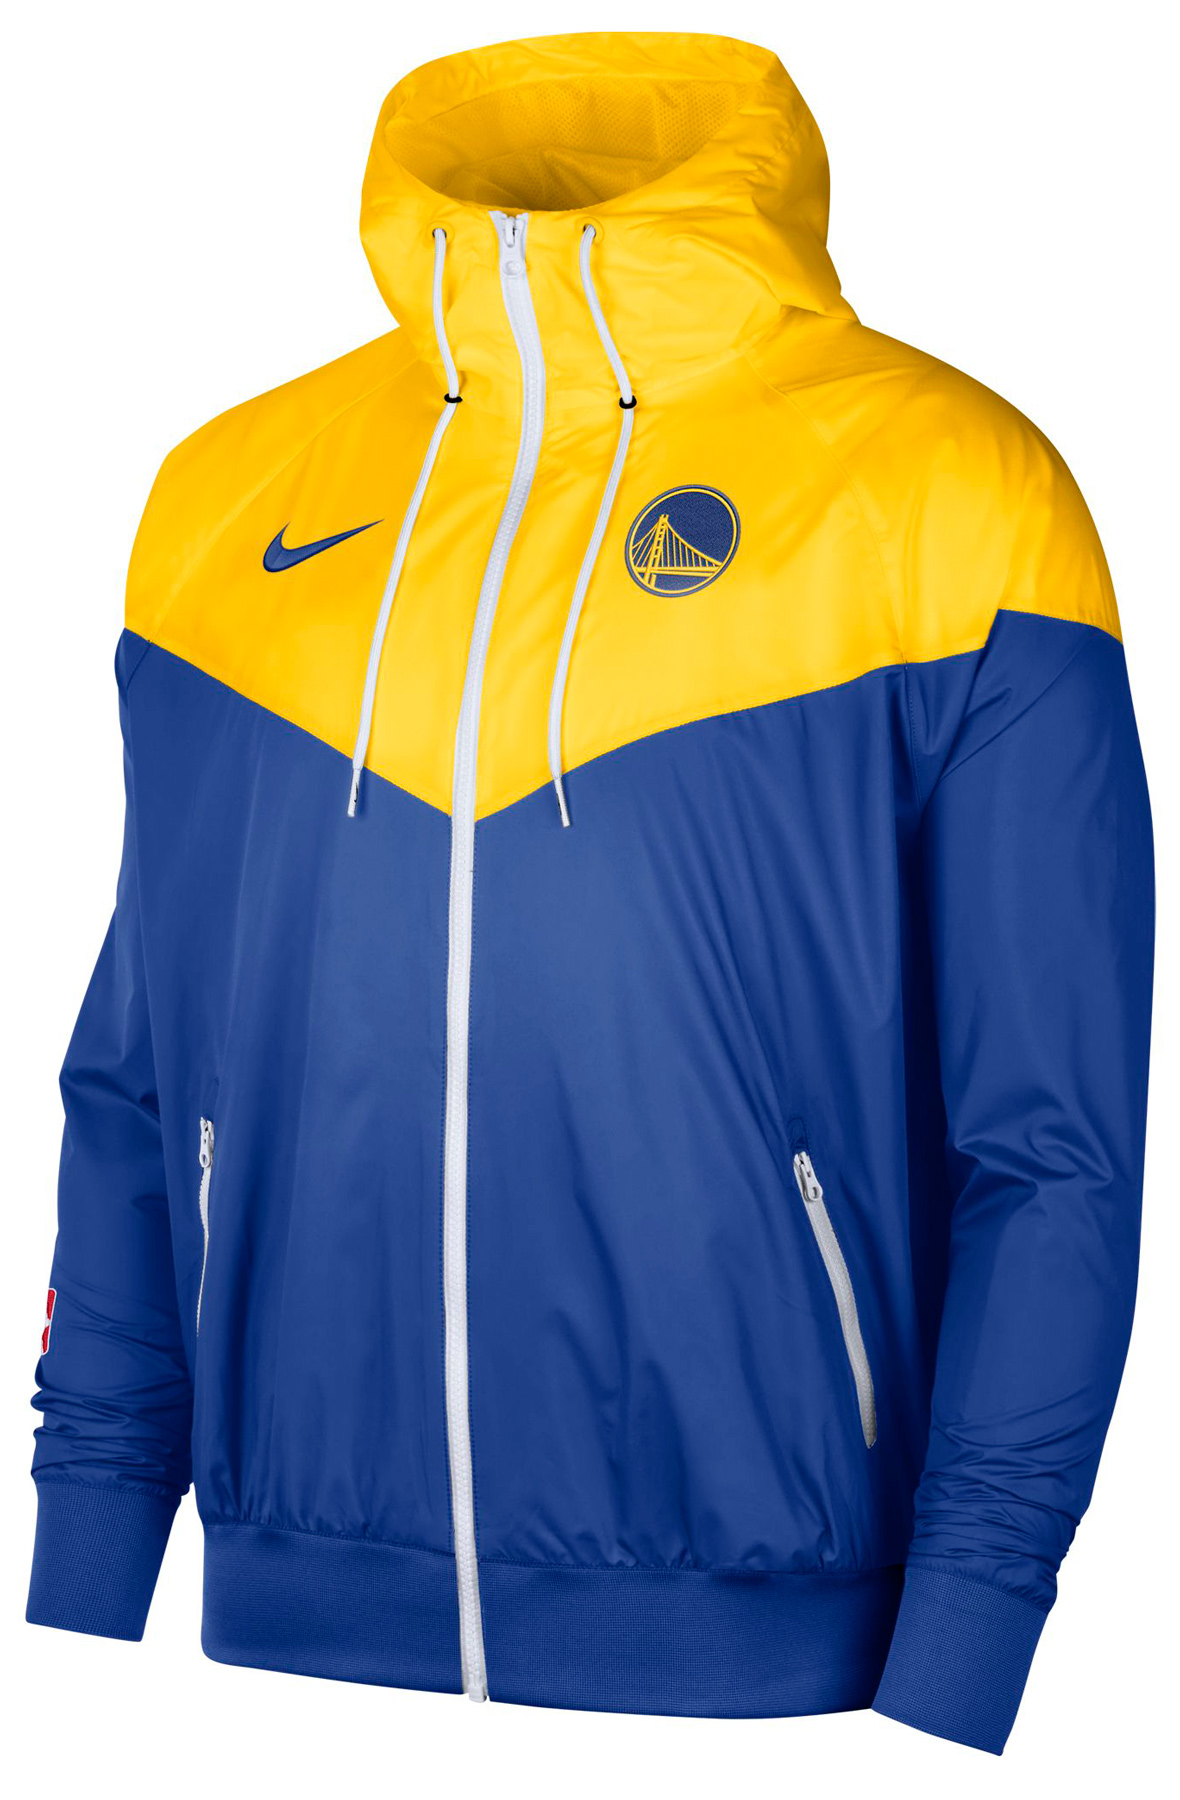 Nike Men's Golden State Warriors Blue Courtside Lightweight Jacket, Small